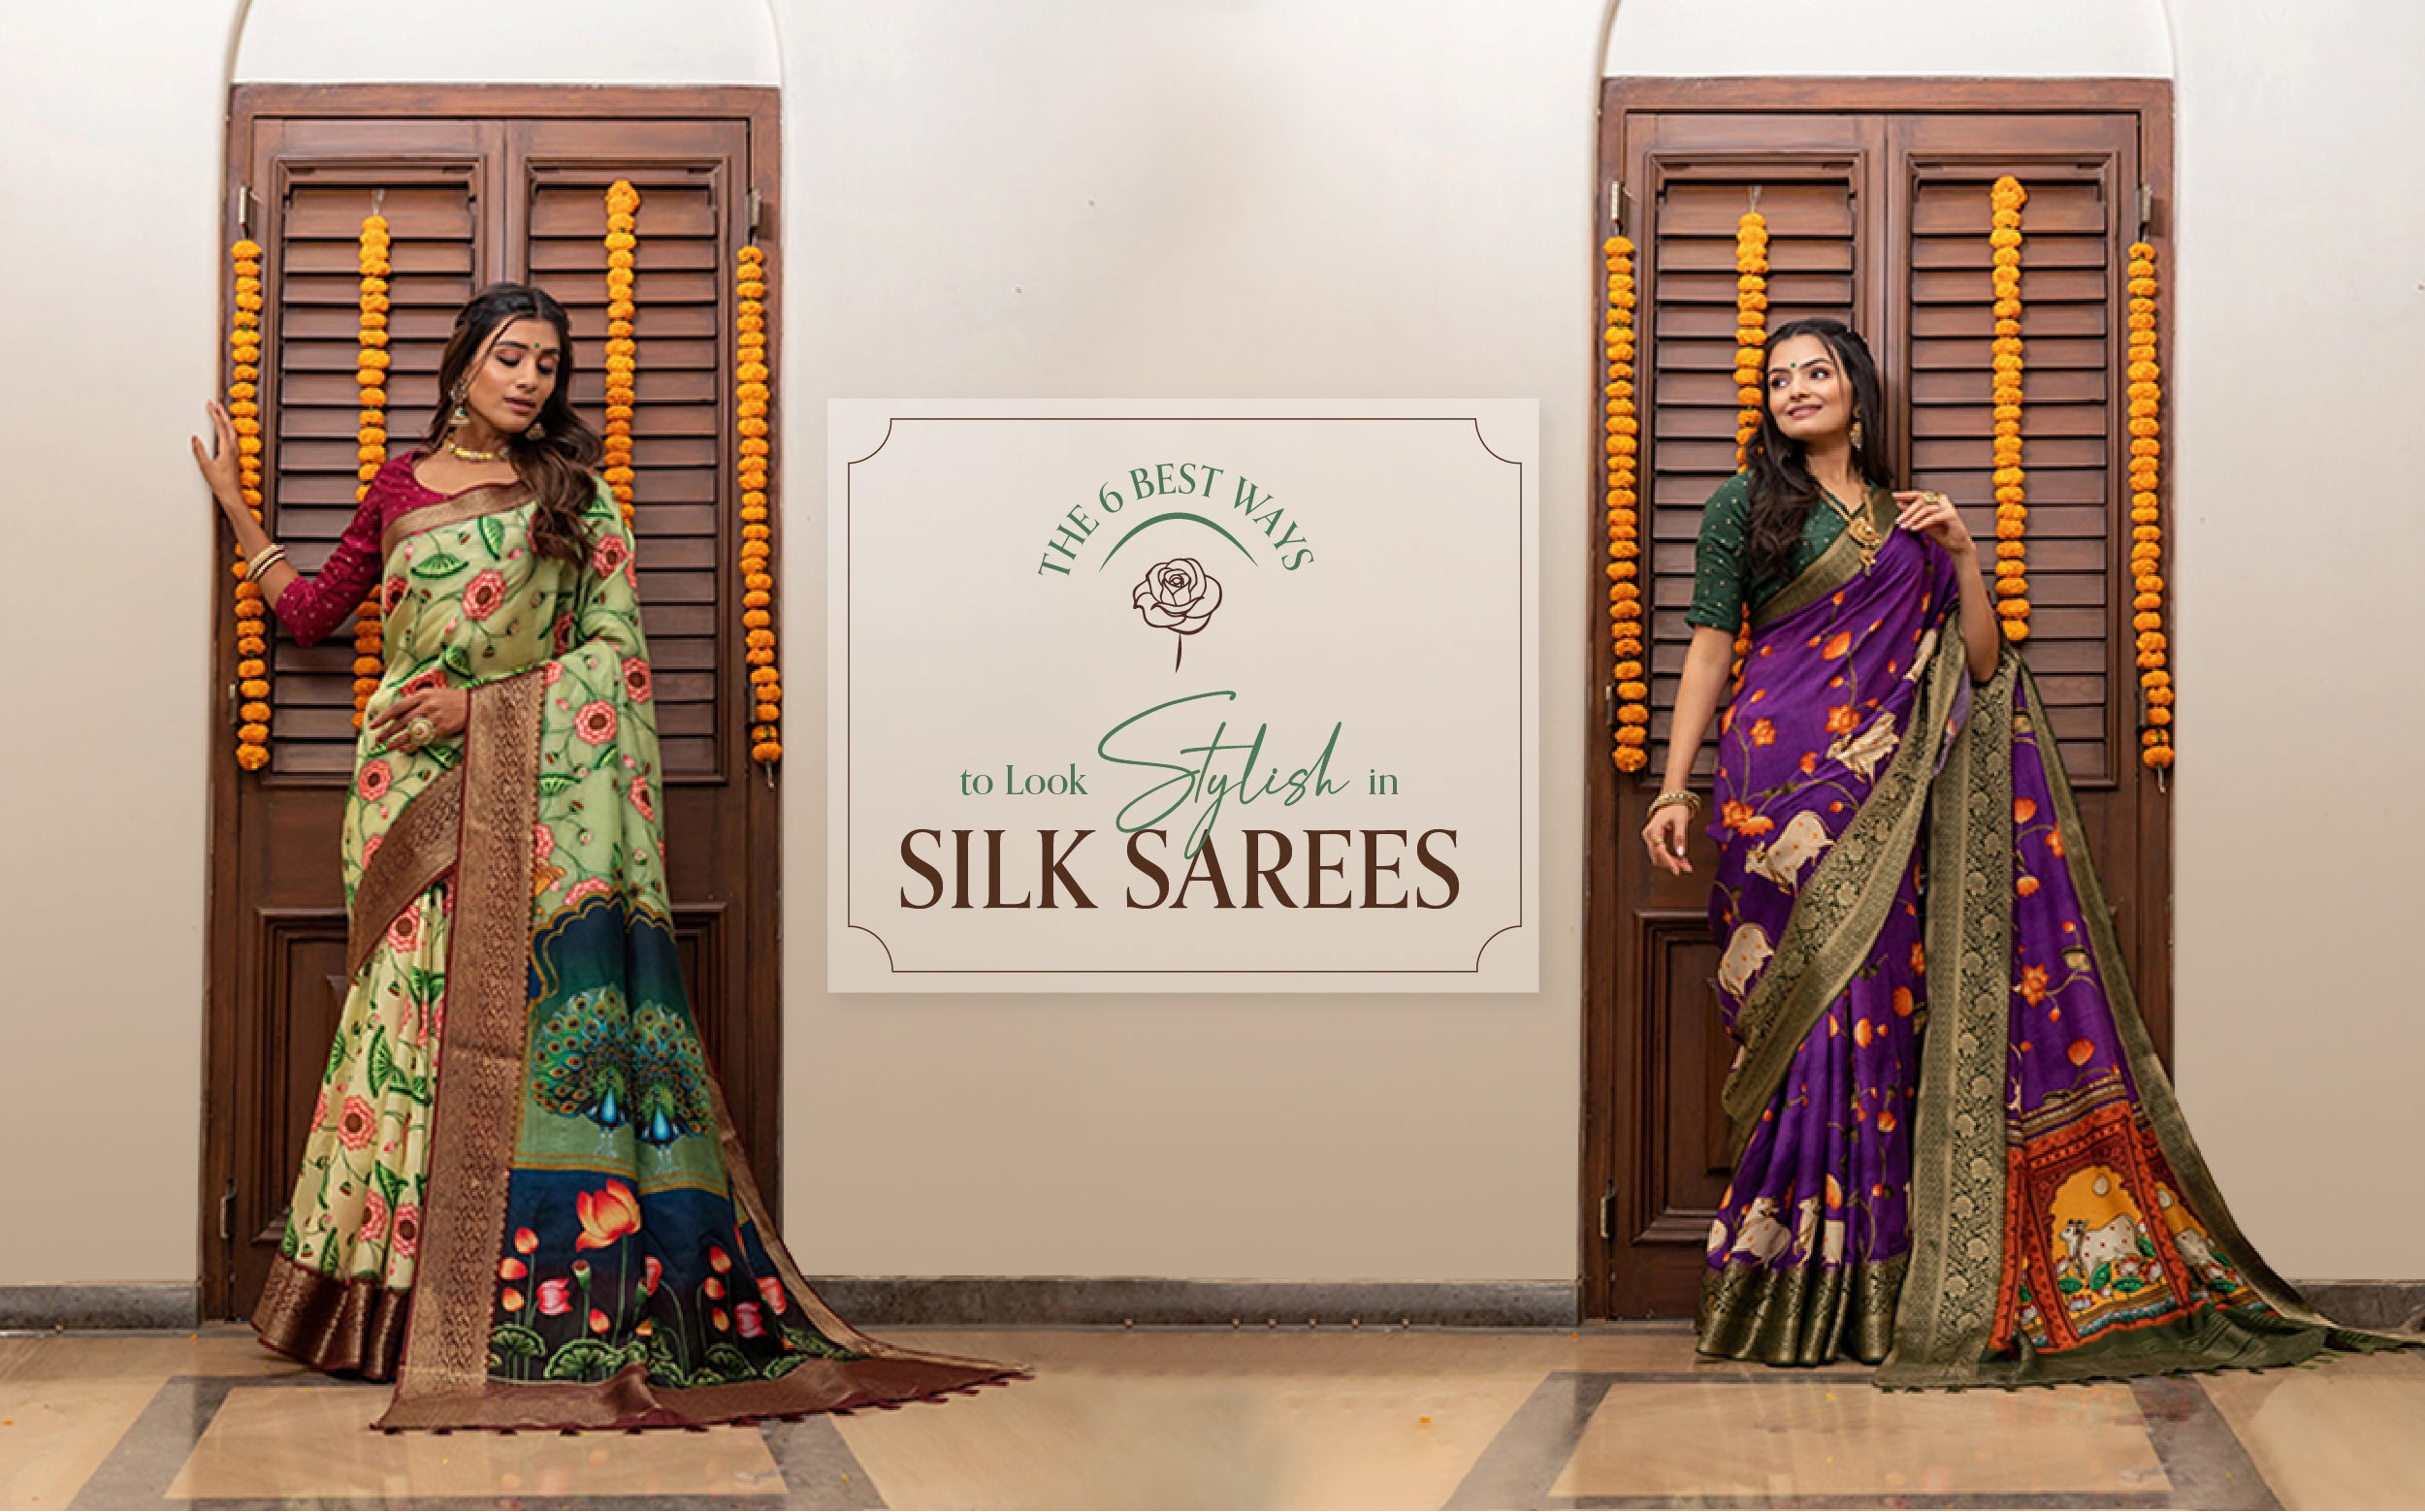 Stylish in Silk Sarees